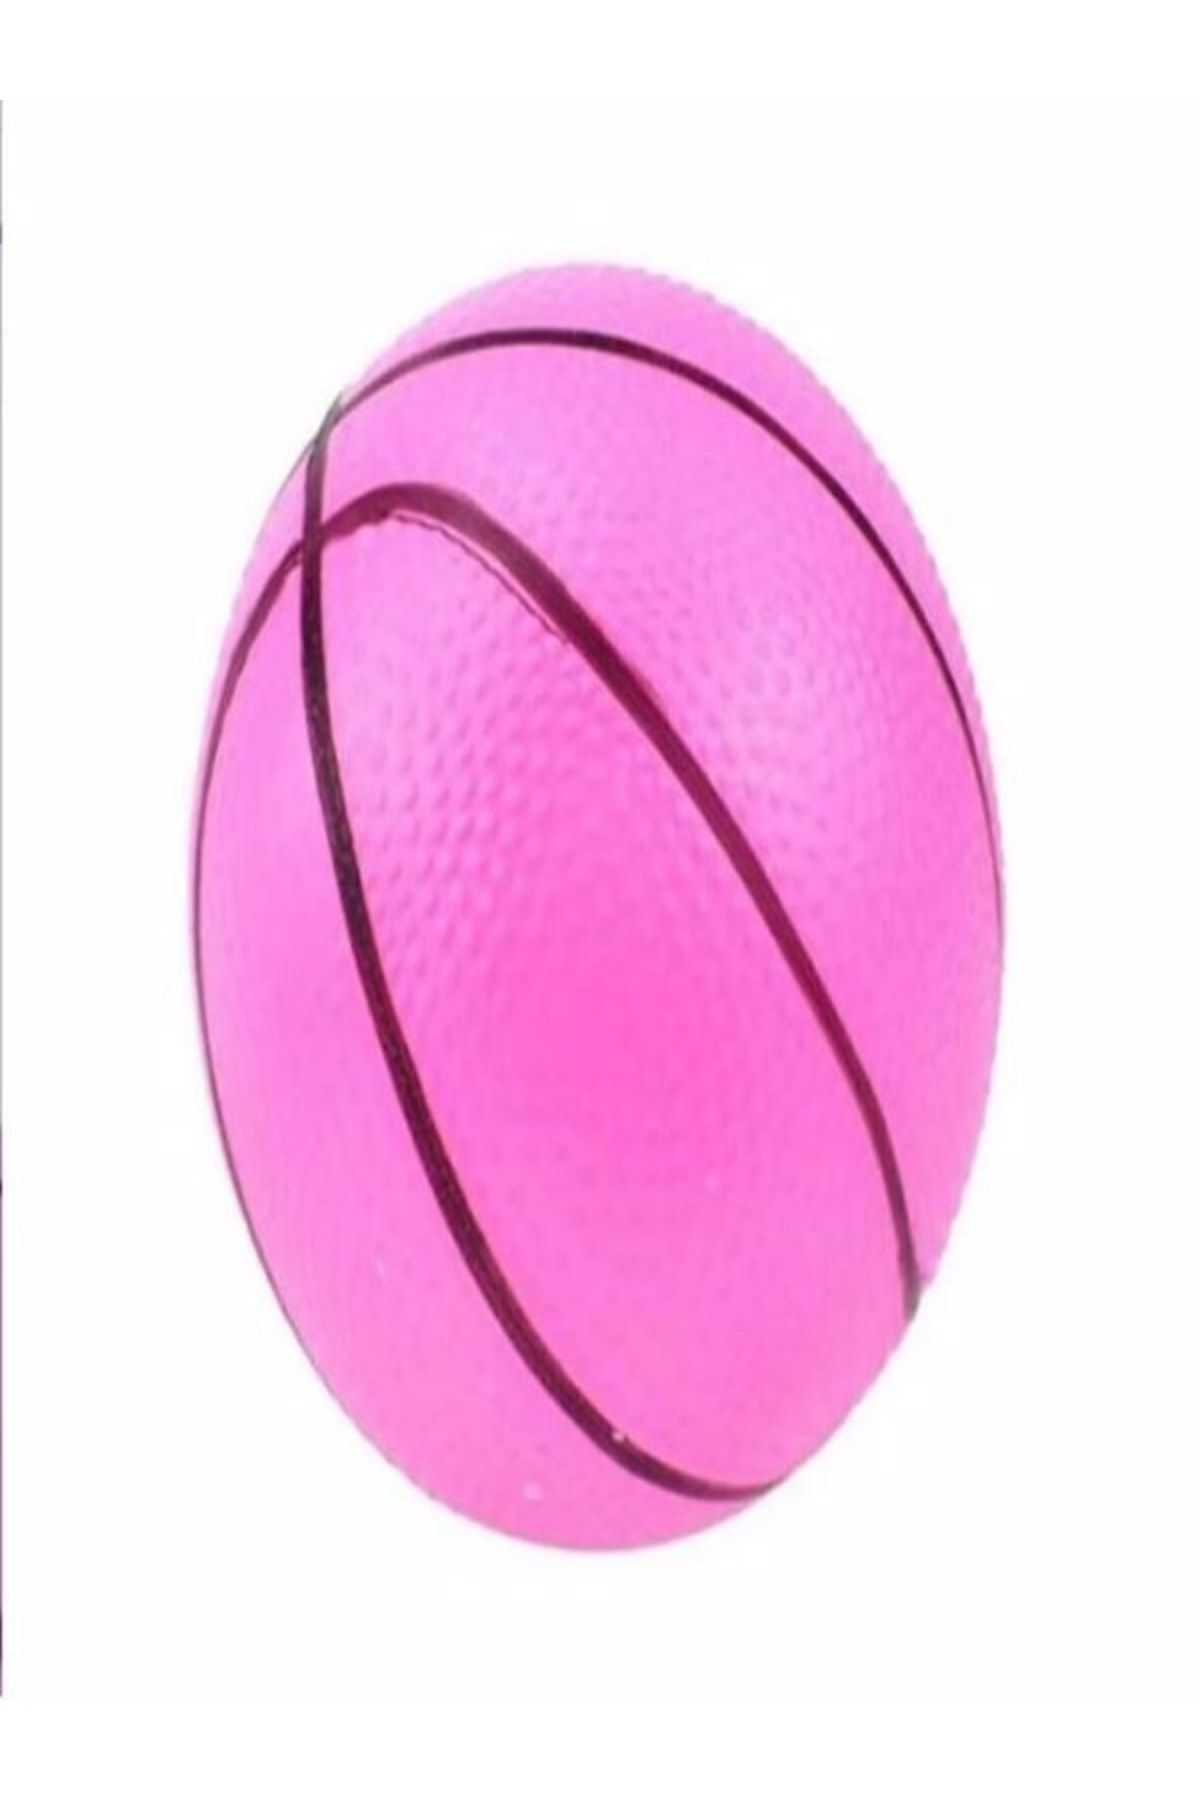 ileritoys Küçük Top Basketbol Topu Plastik Top